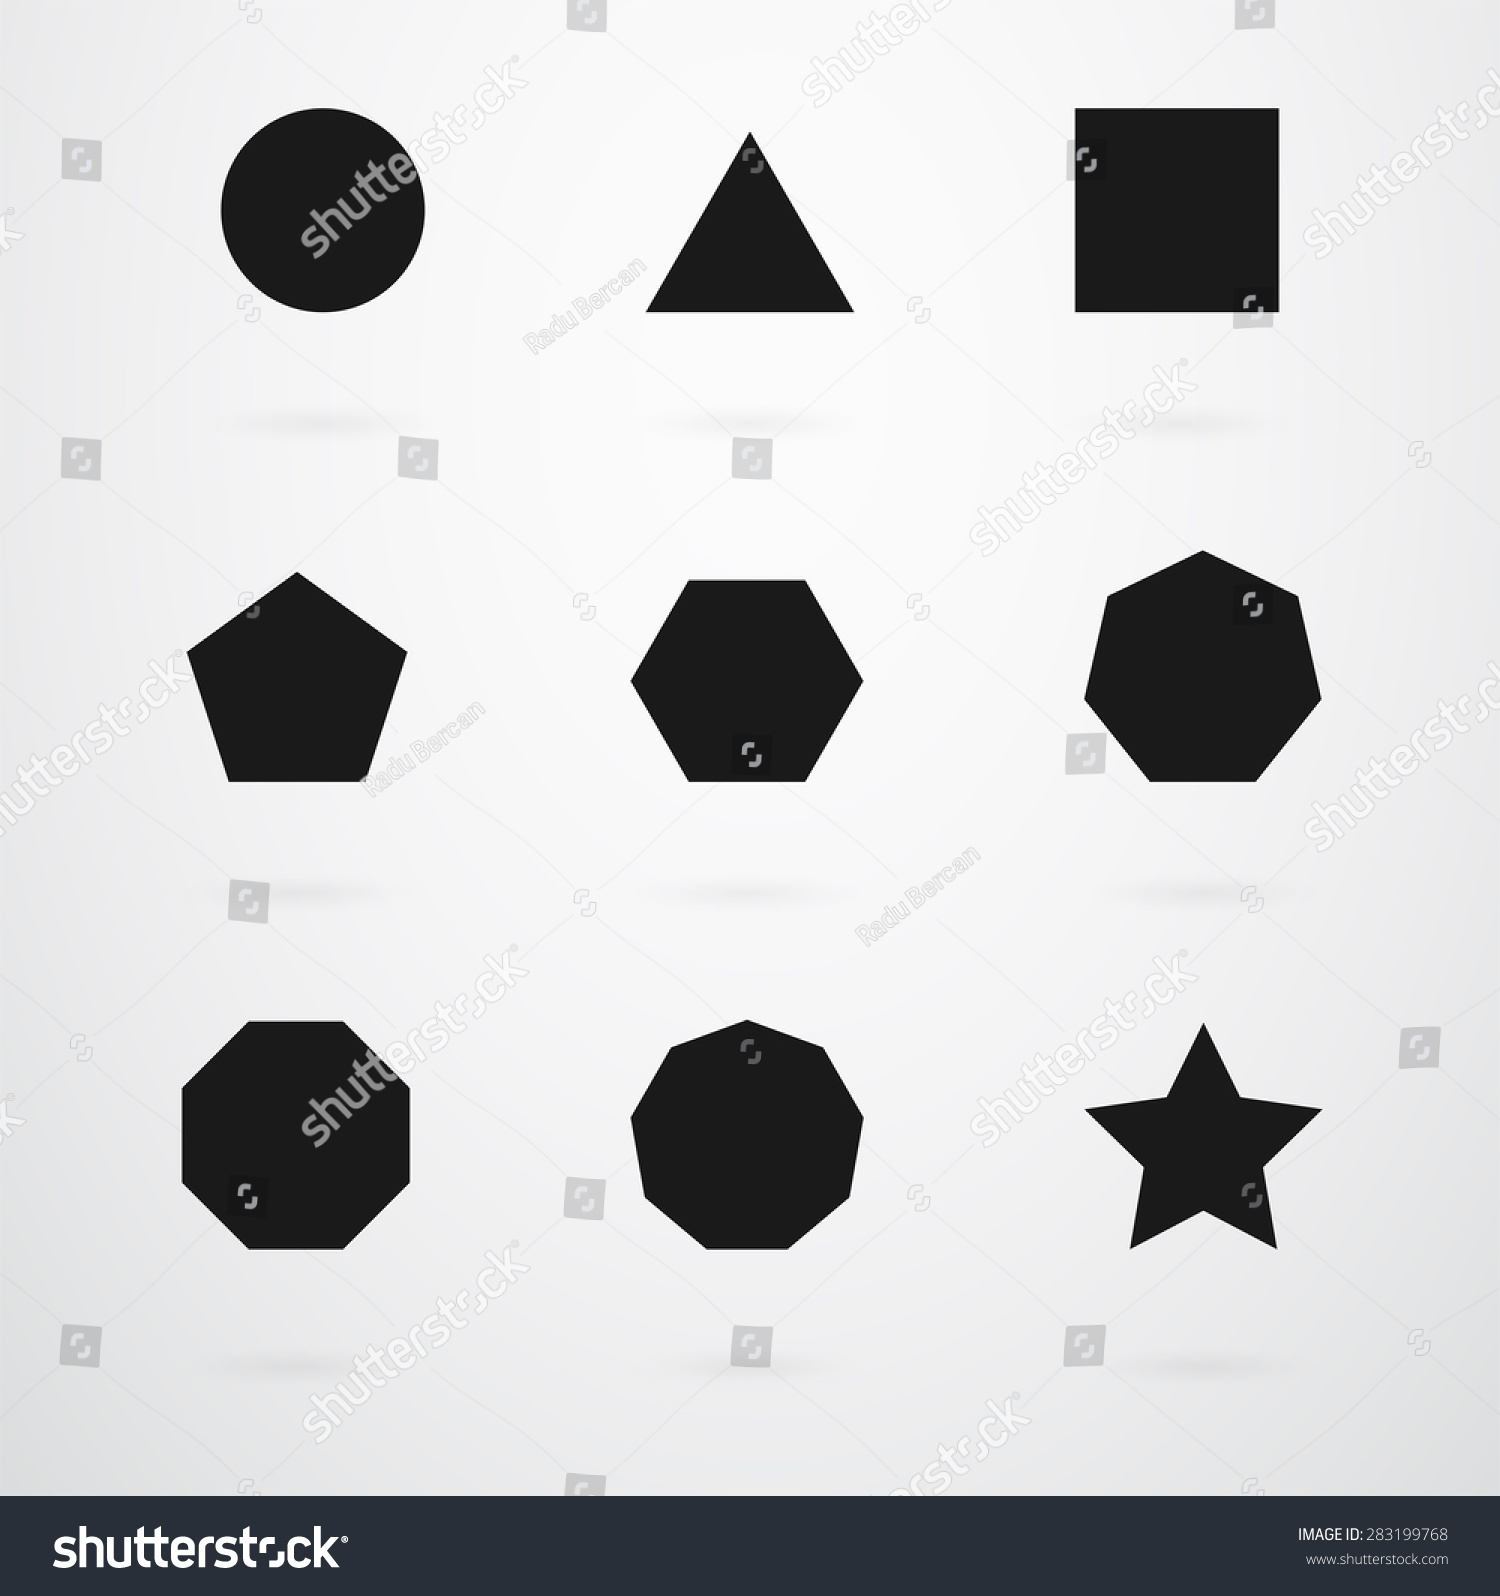 Basic Geometric Shapes Vector Icon Set - 283199768 : Shutterstock